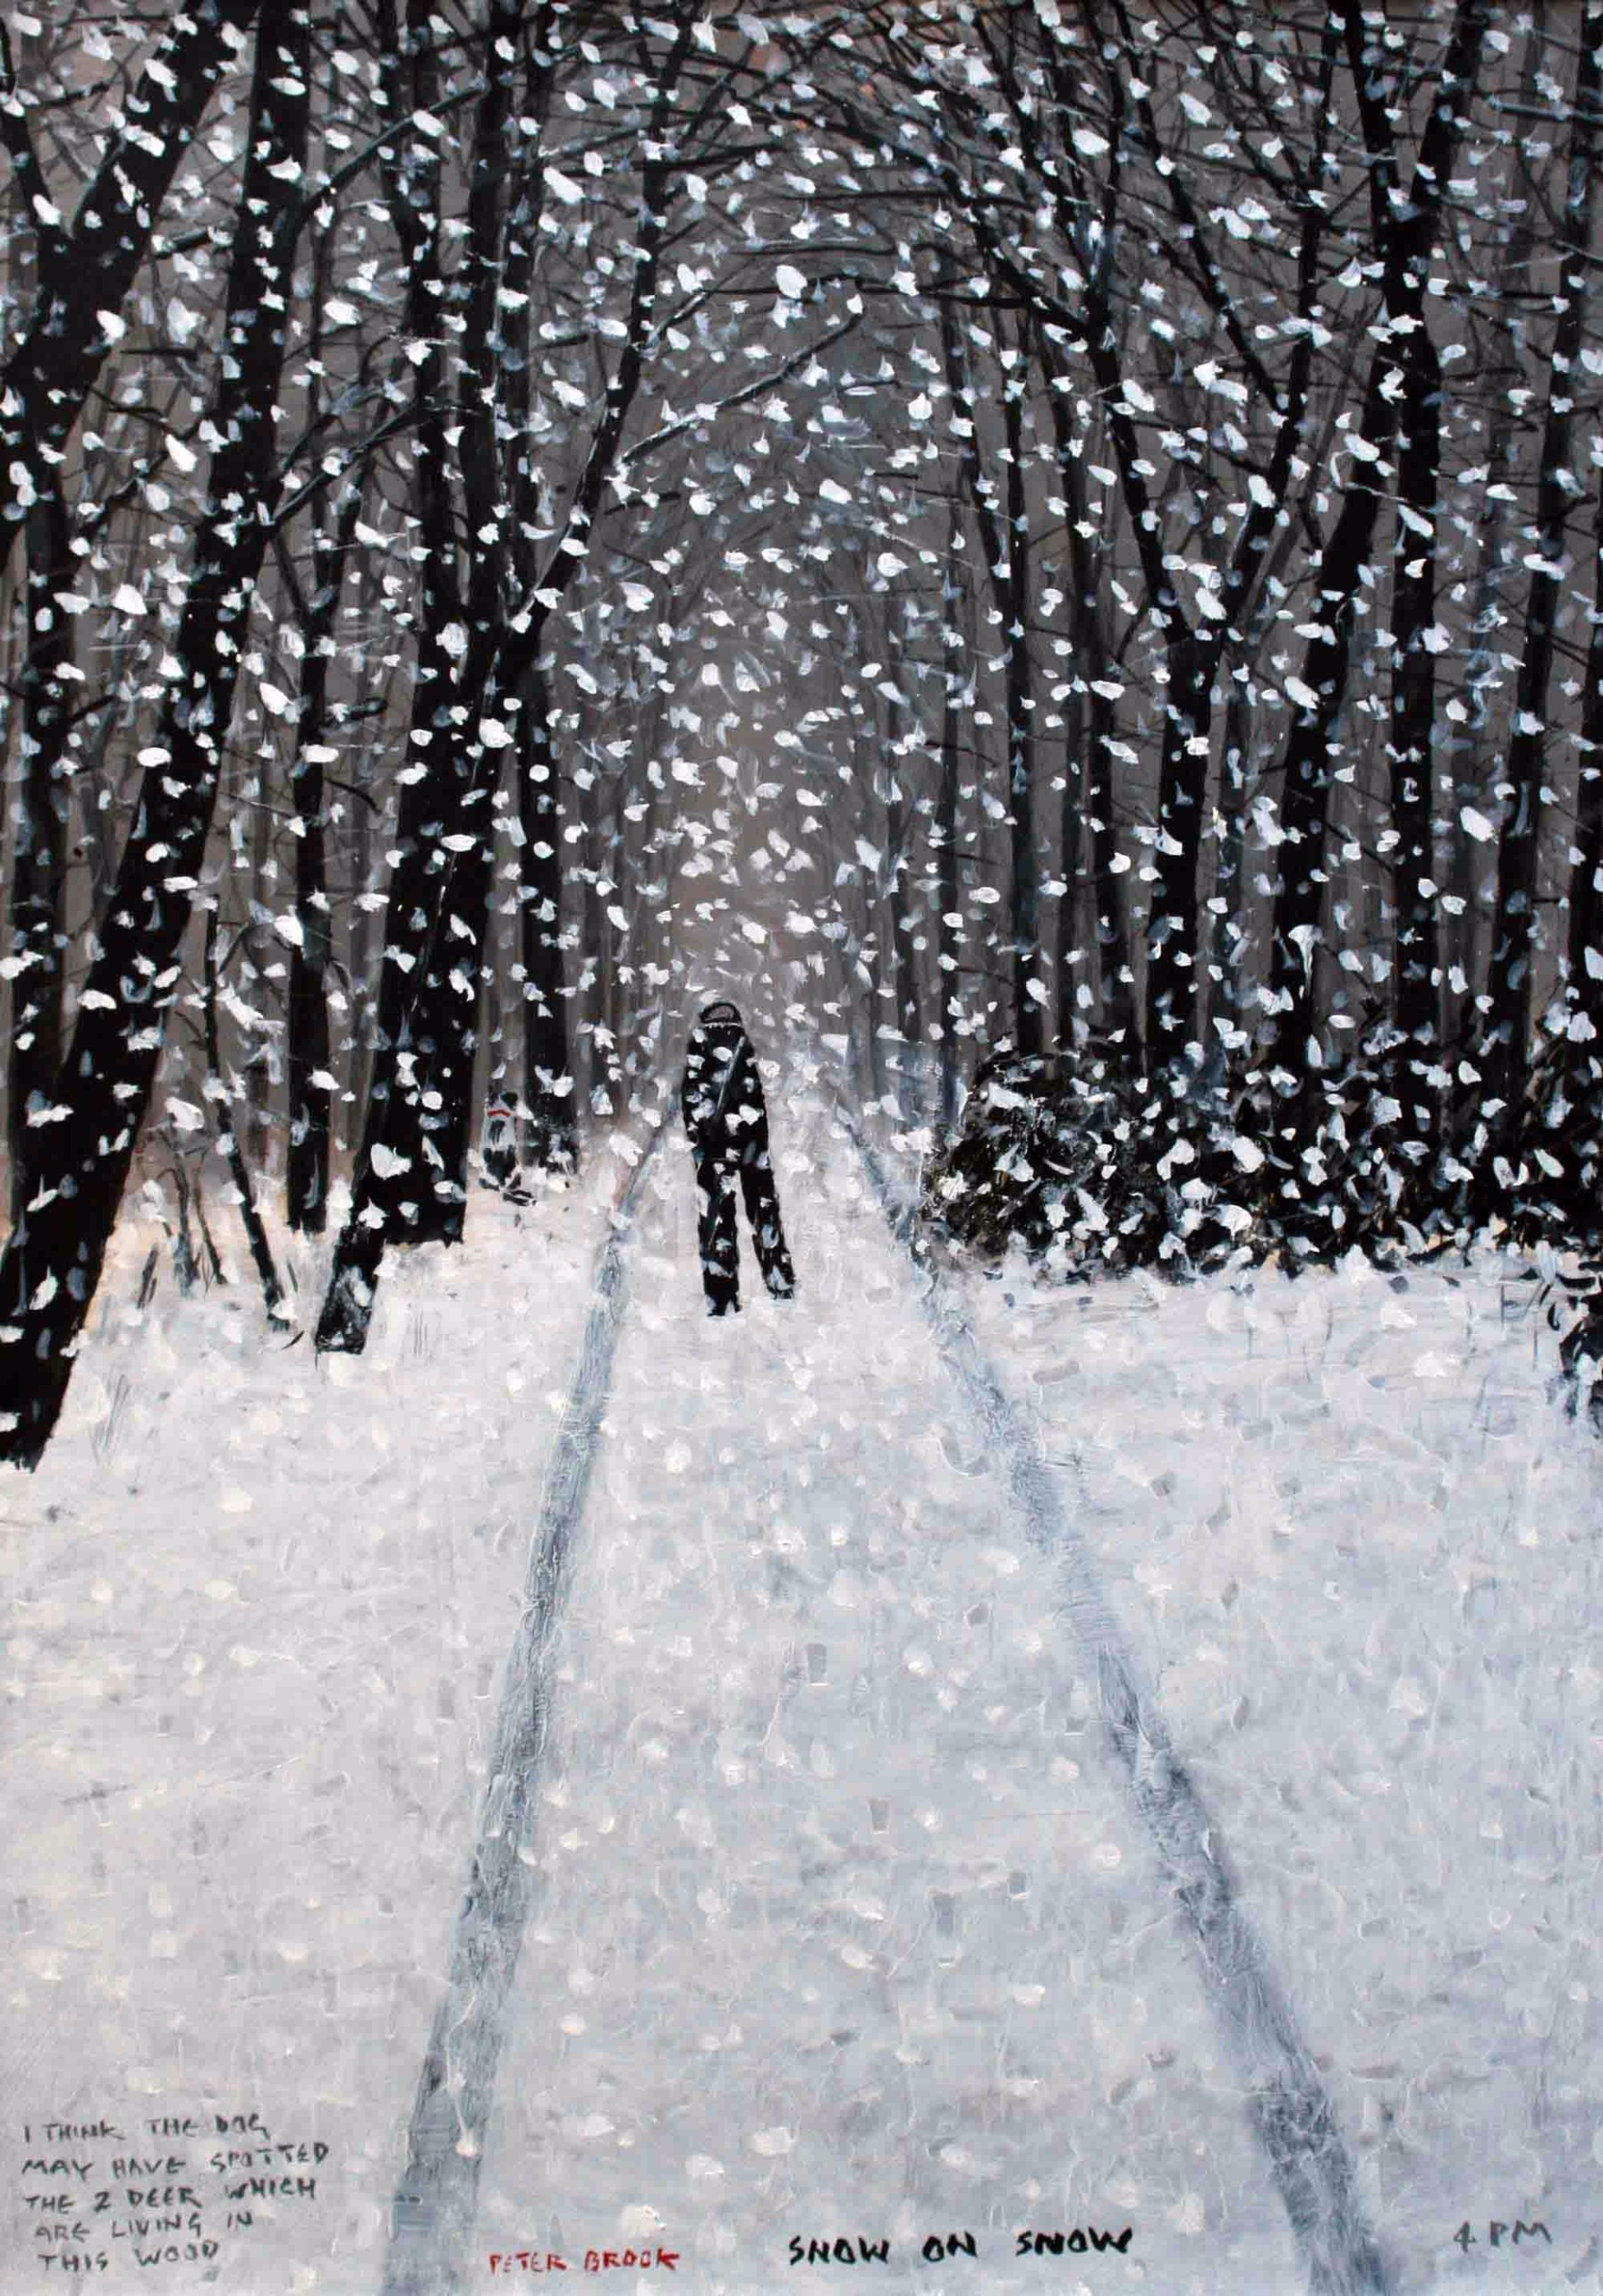 Snow On Snow by Peter Brook